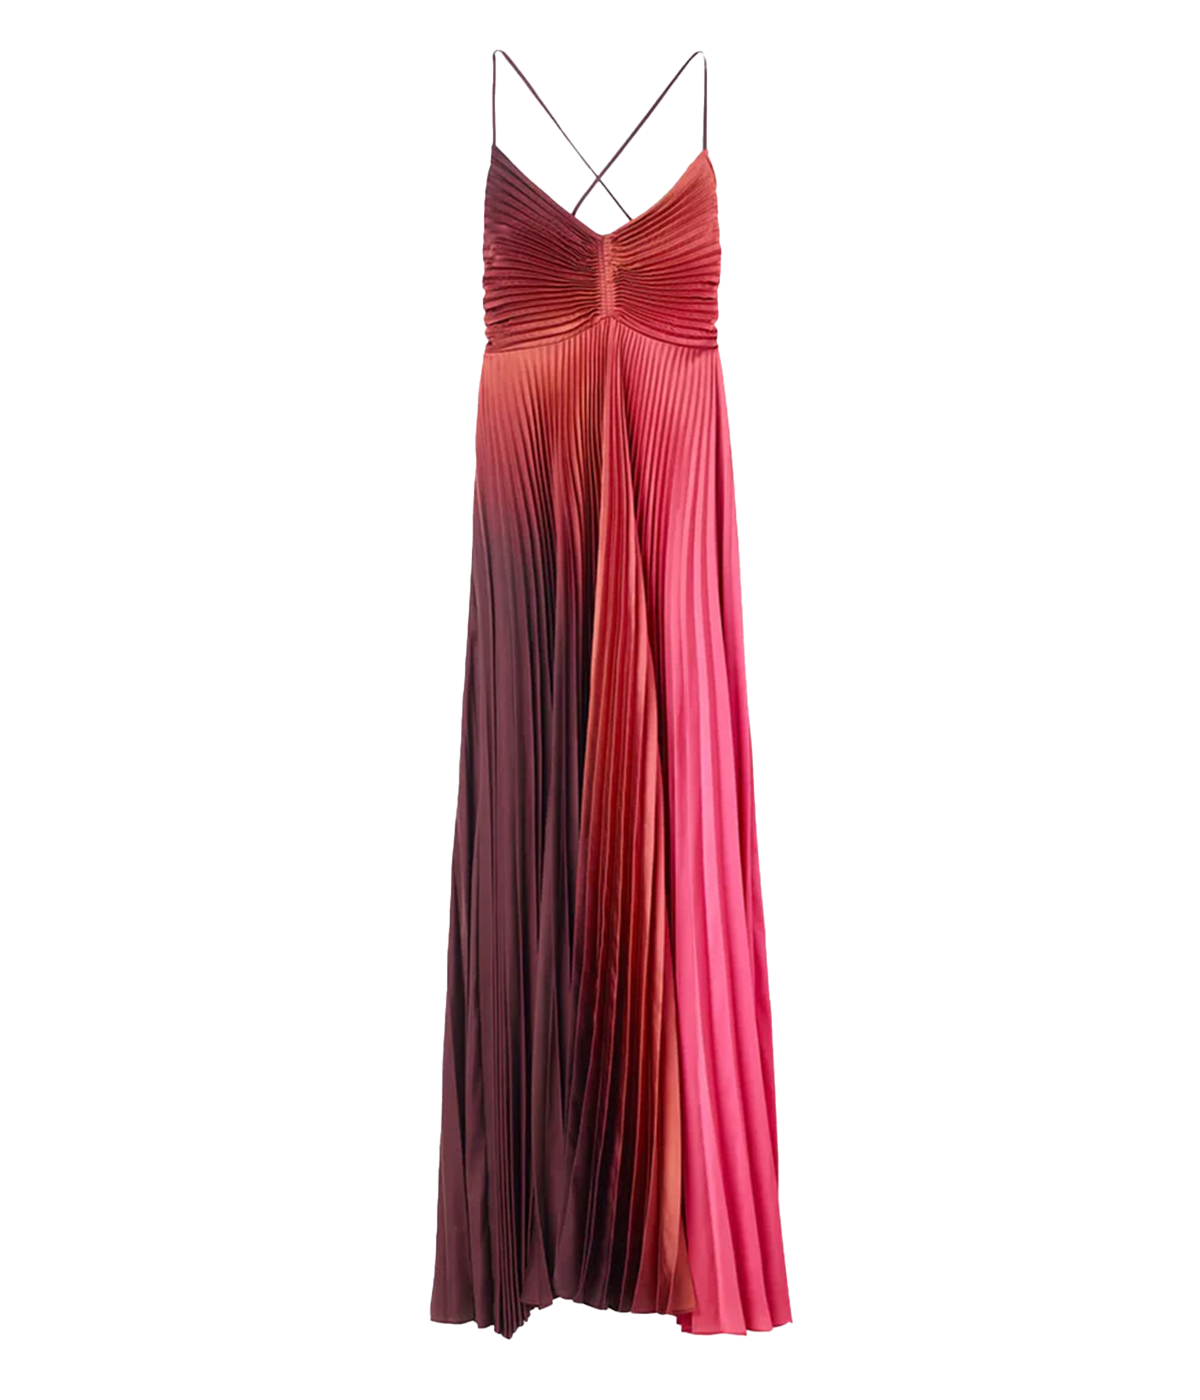 Ariya Dress in Pink & Chocolate